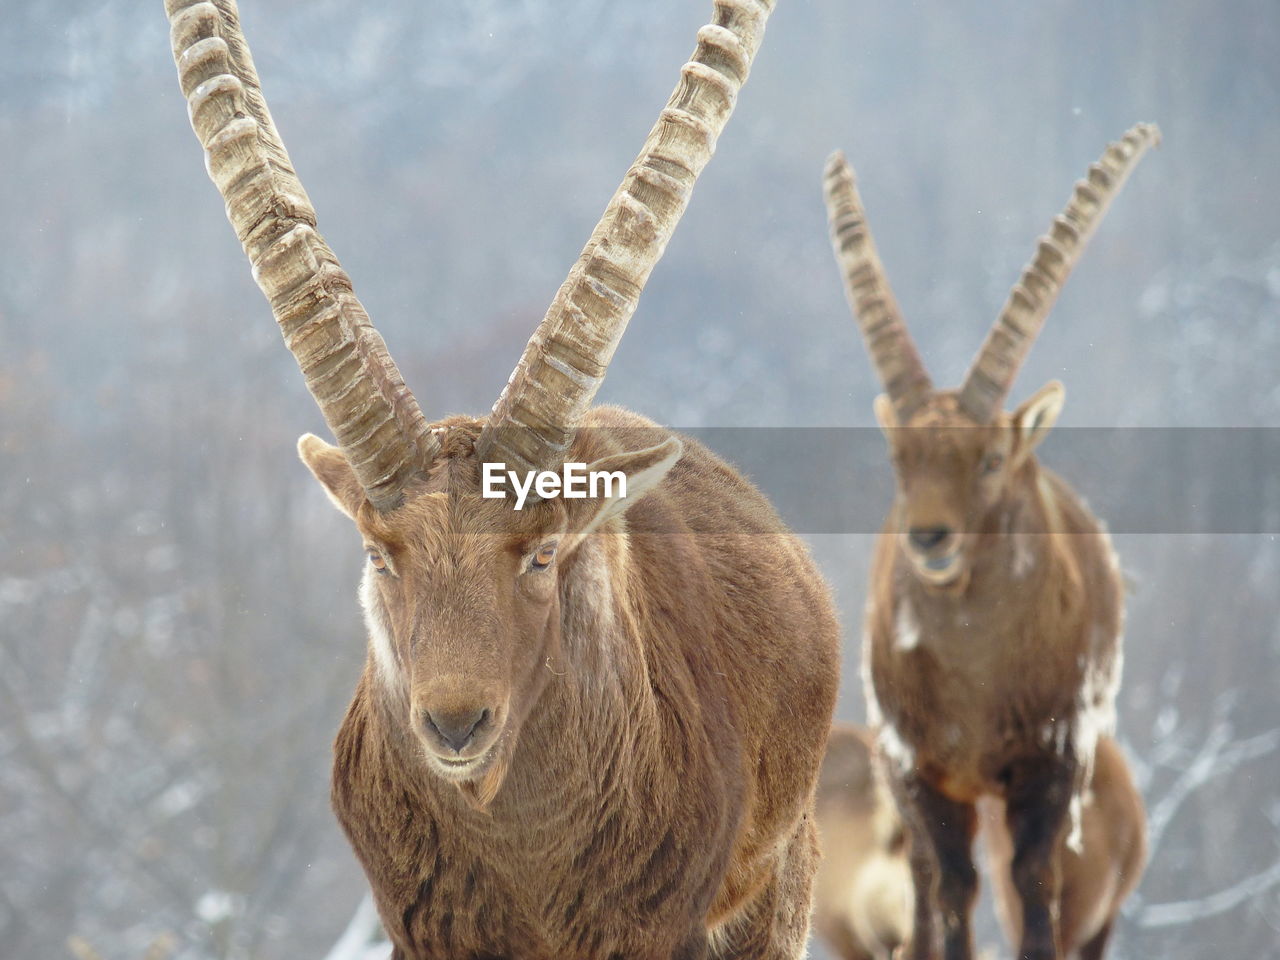 Alpine ibex looking at camera